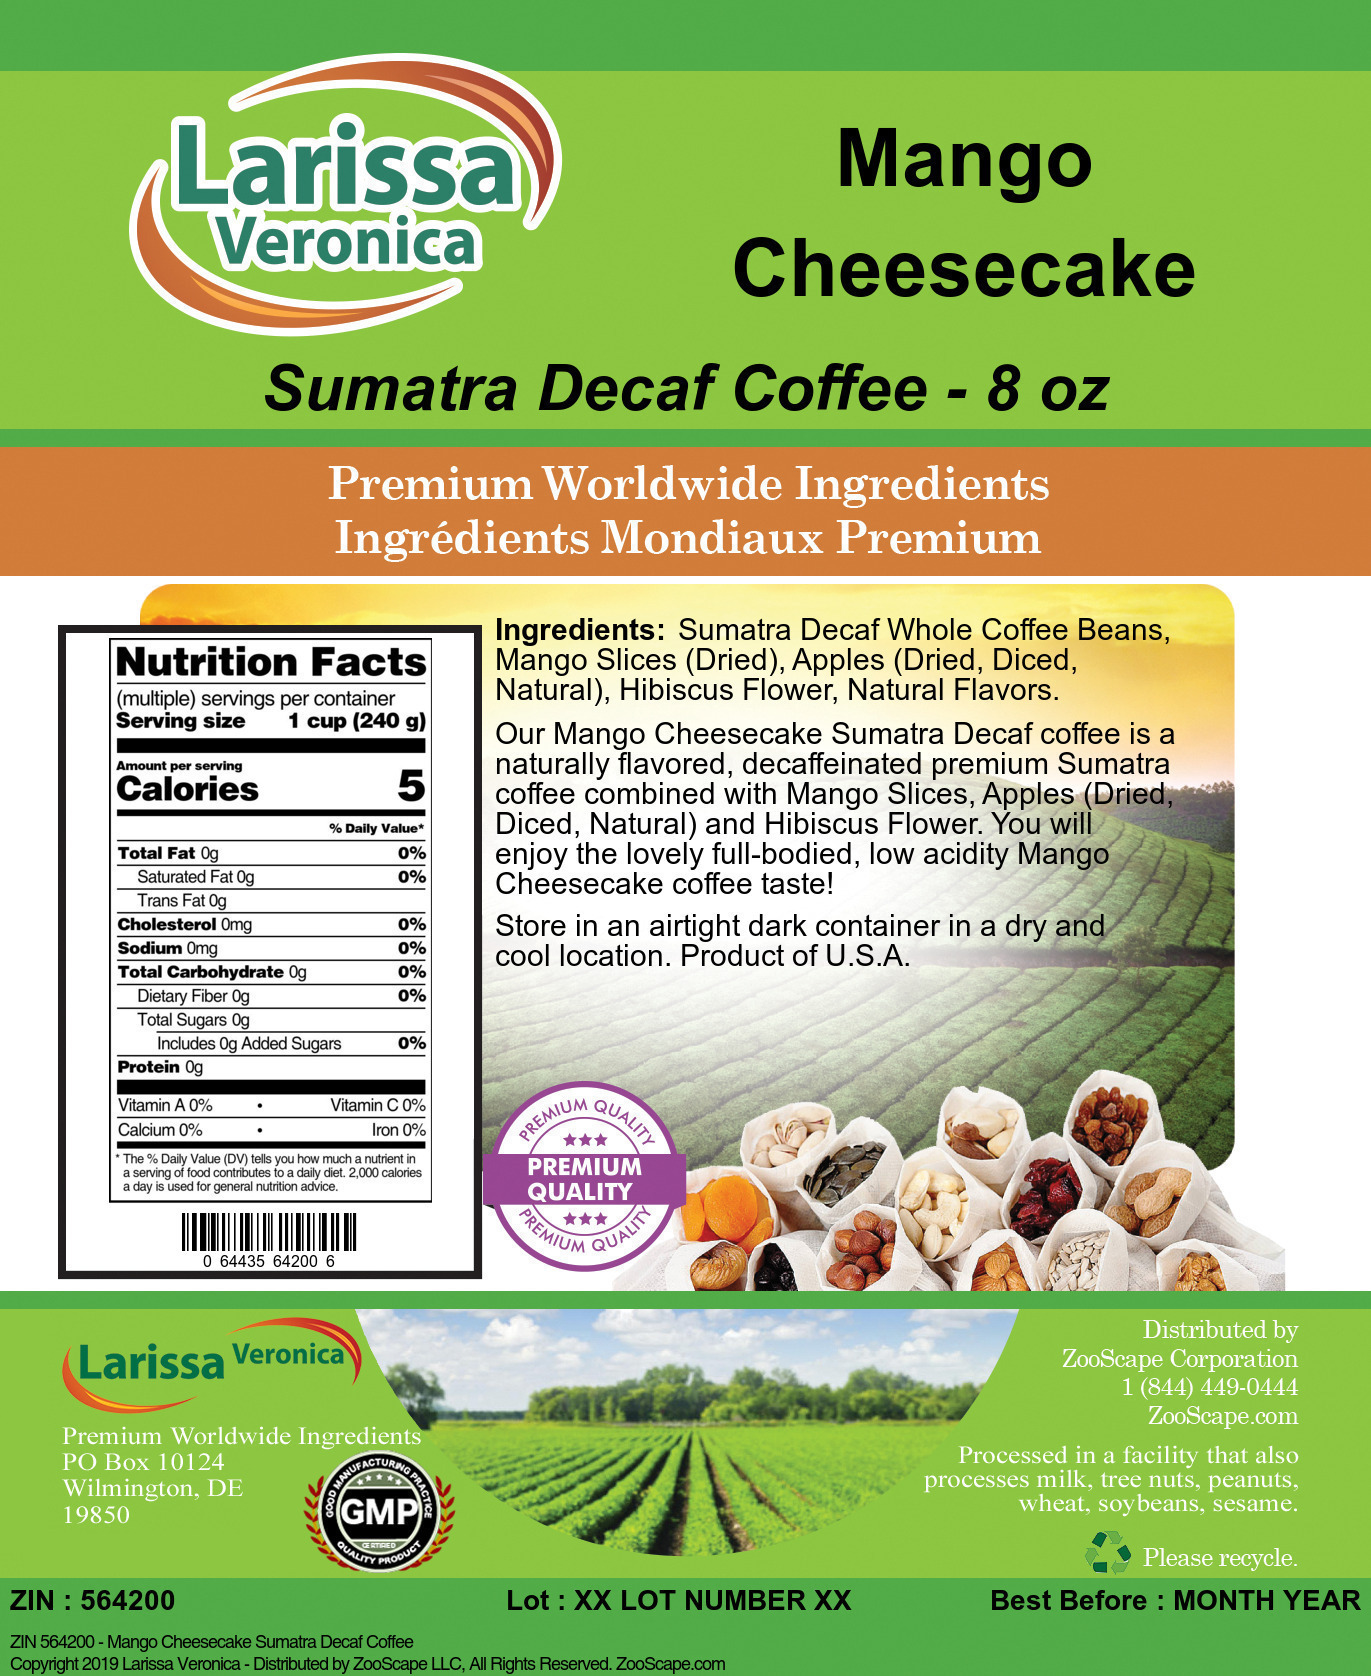 Mango Cheesecake Sumatra Decaf Coffee - Label